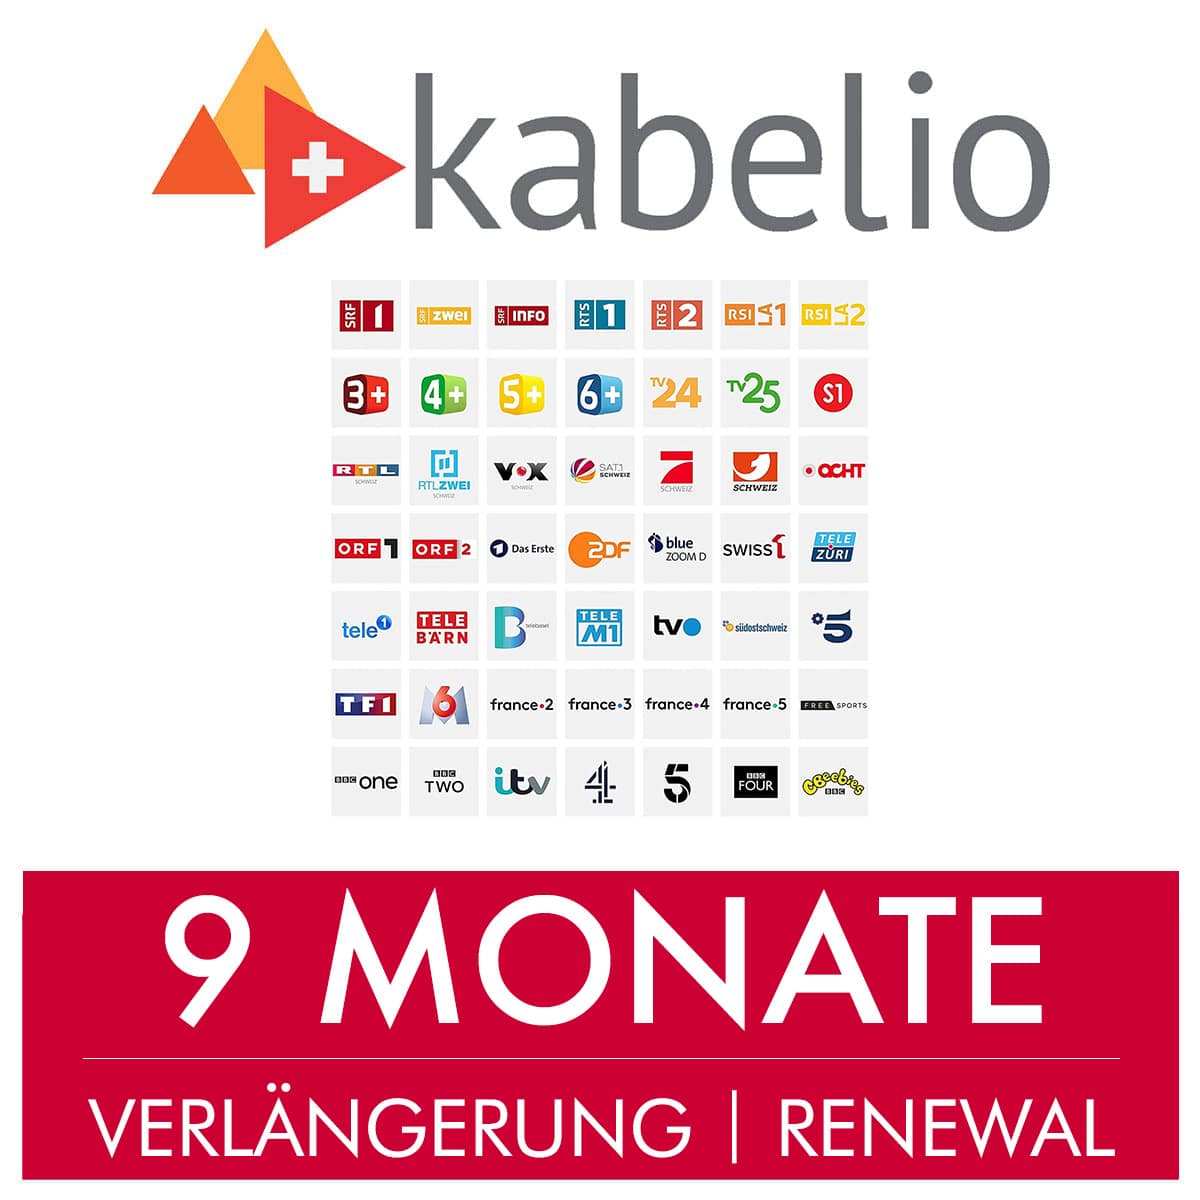 Kabelio Verlängerung Renewal 9 Monate Zugangs Code